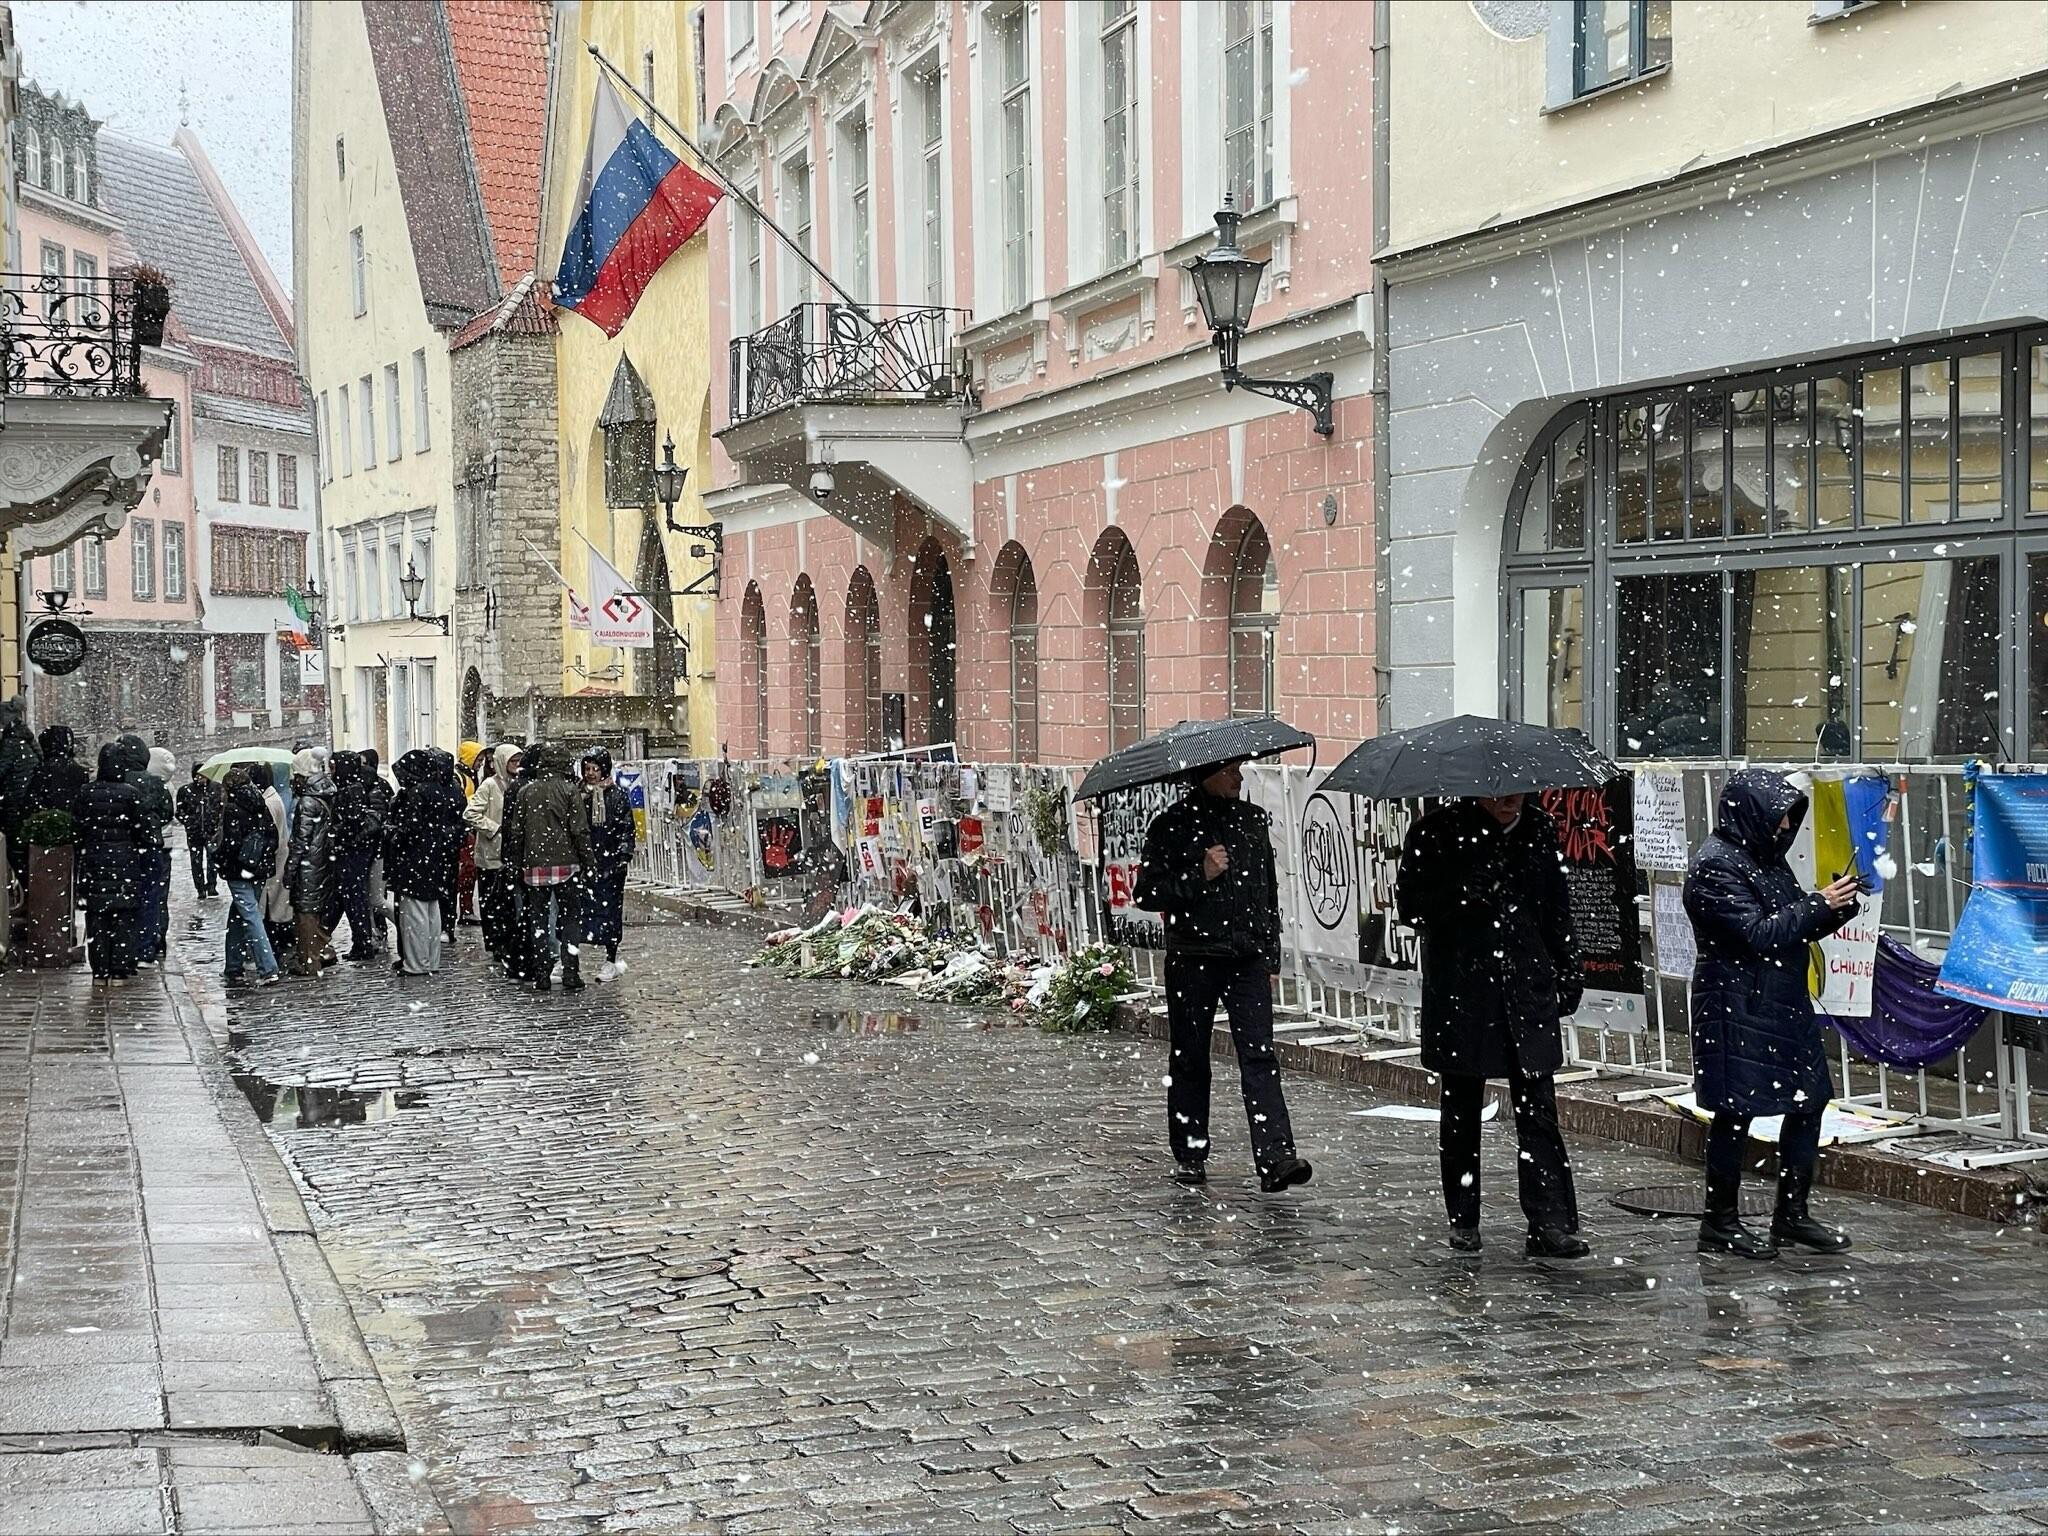 Estonia has decided to expel a Russian diplomat